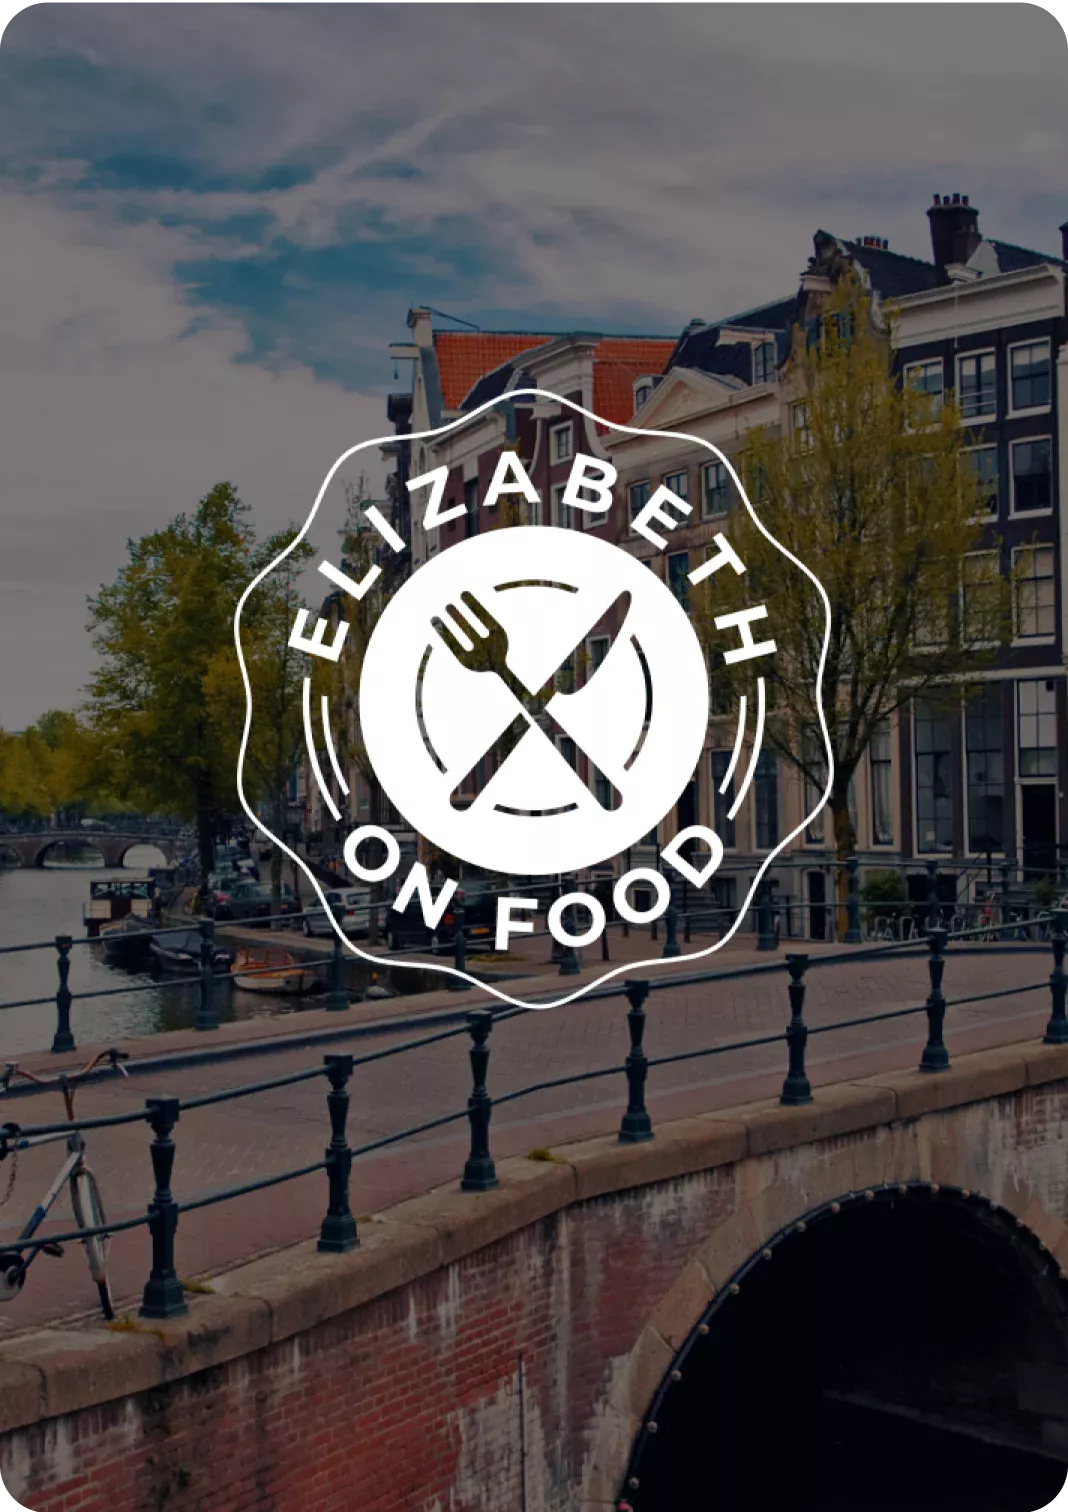 Elizabeth on Food: the restaurant guide app of Amsterdam - DTT apps